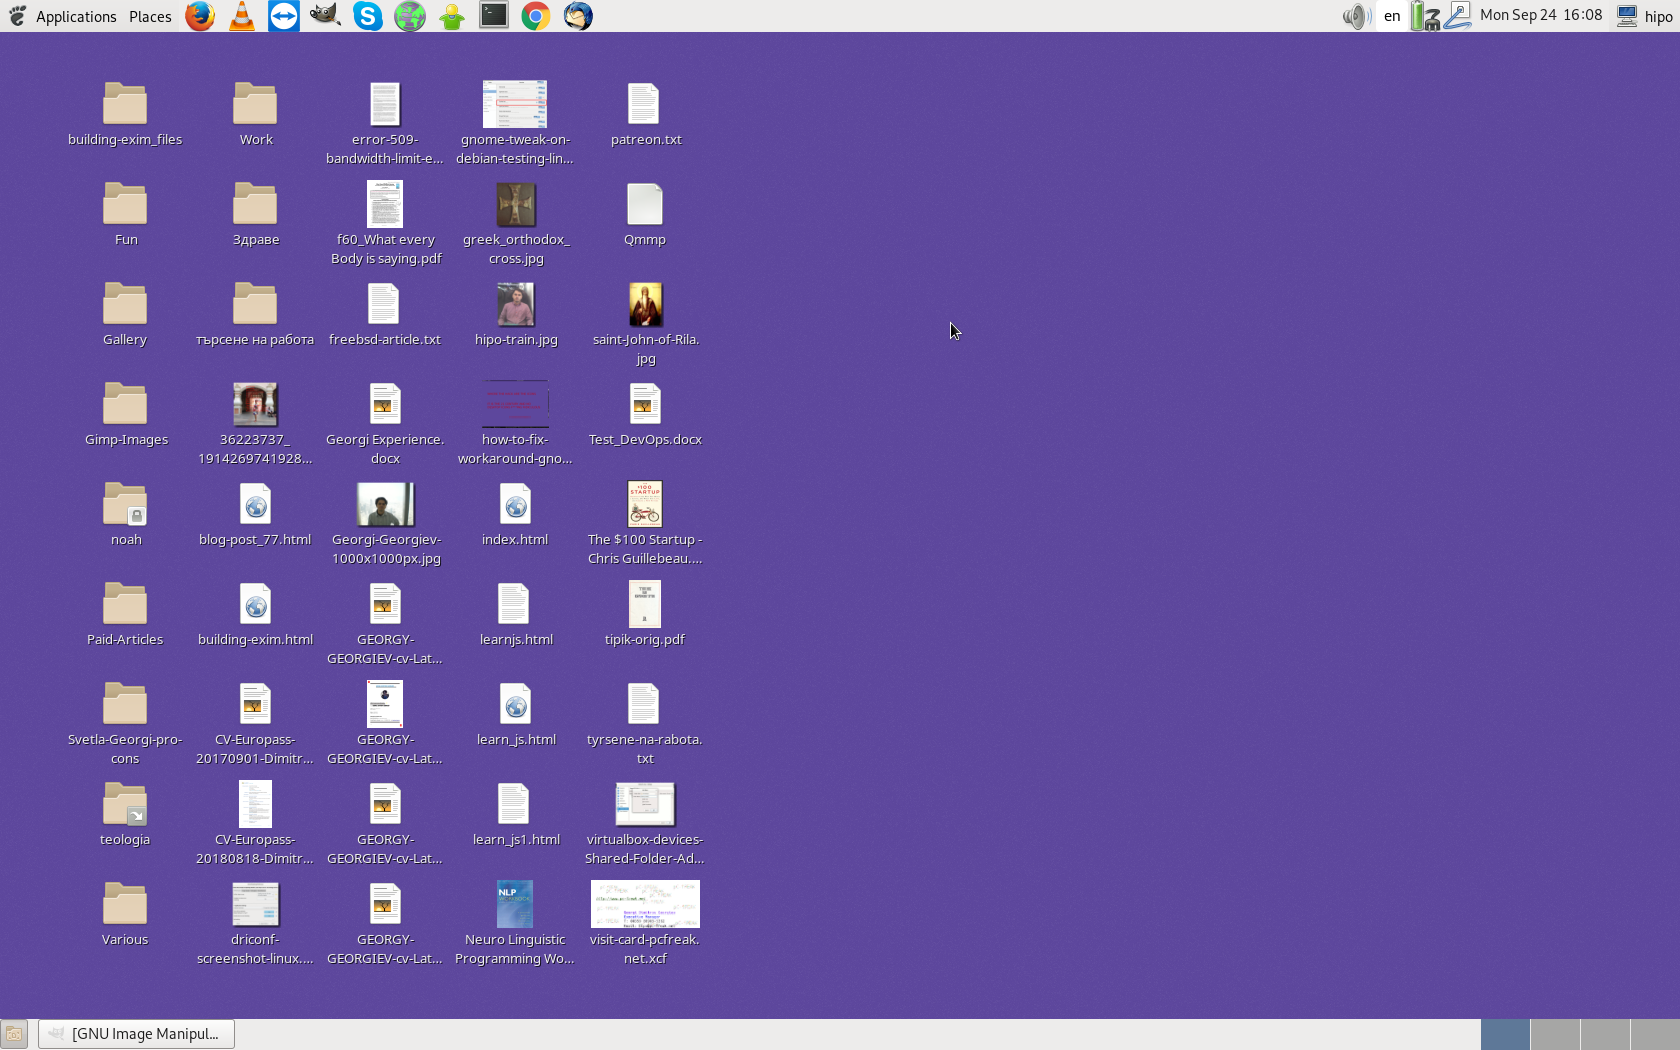 classic-gnome-flashback-debian-gnu-linux-hipos-desktop-screenshot